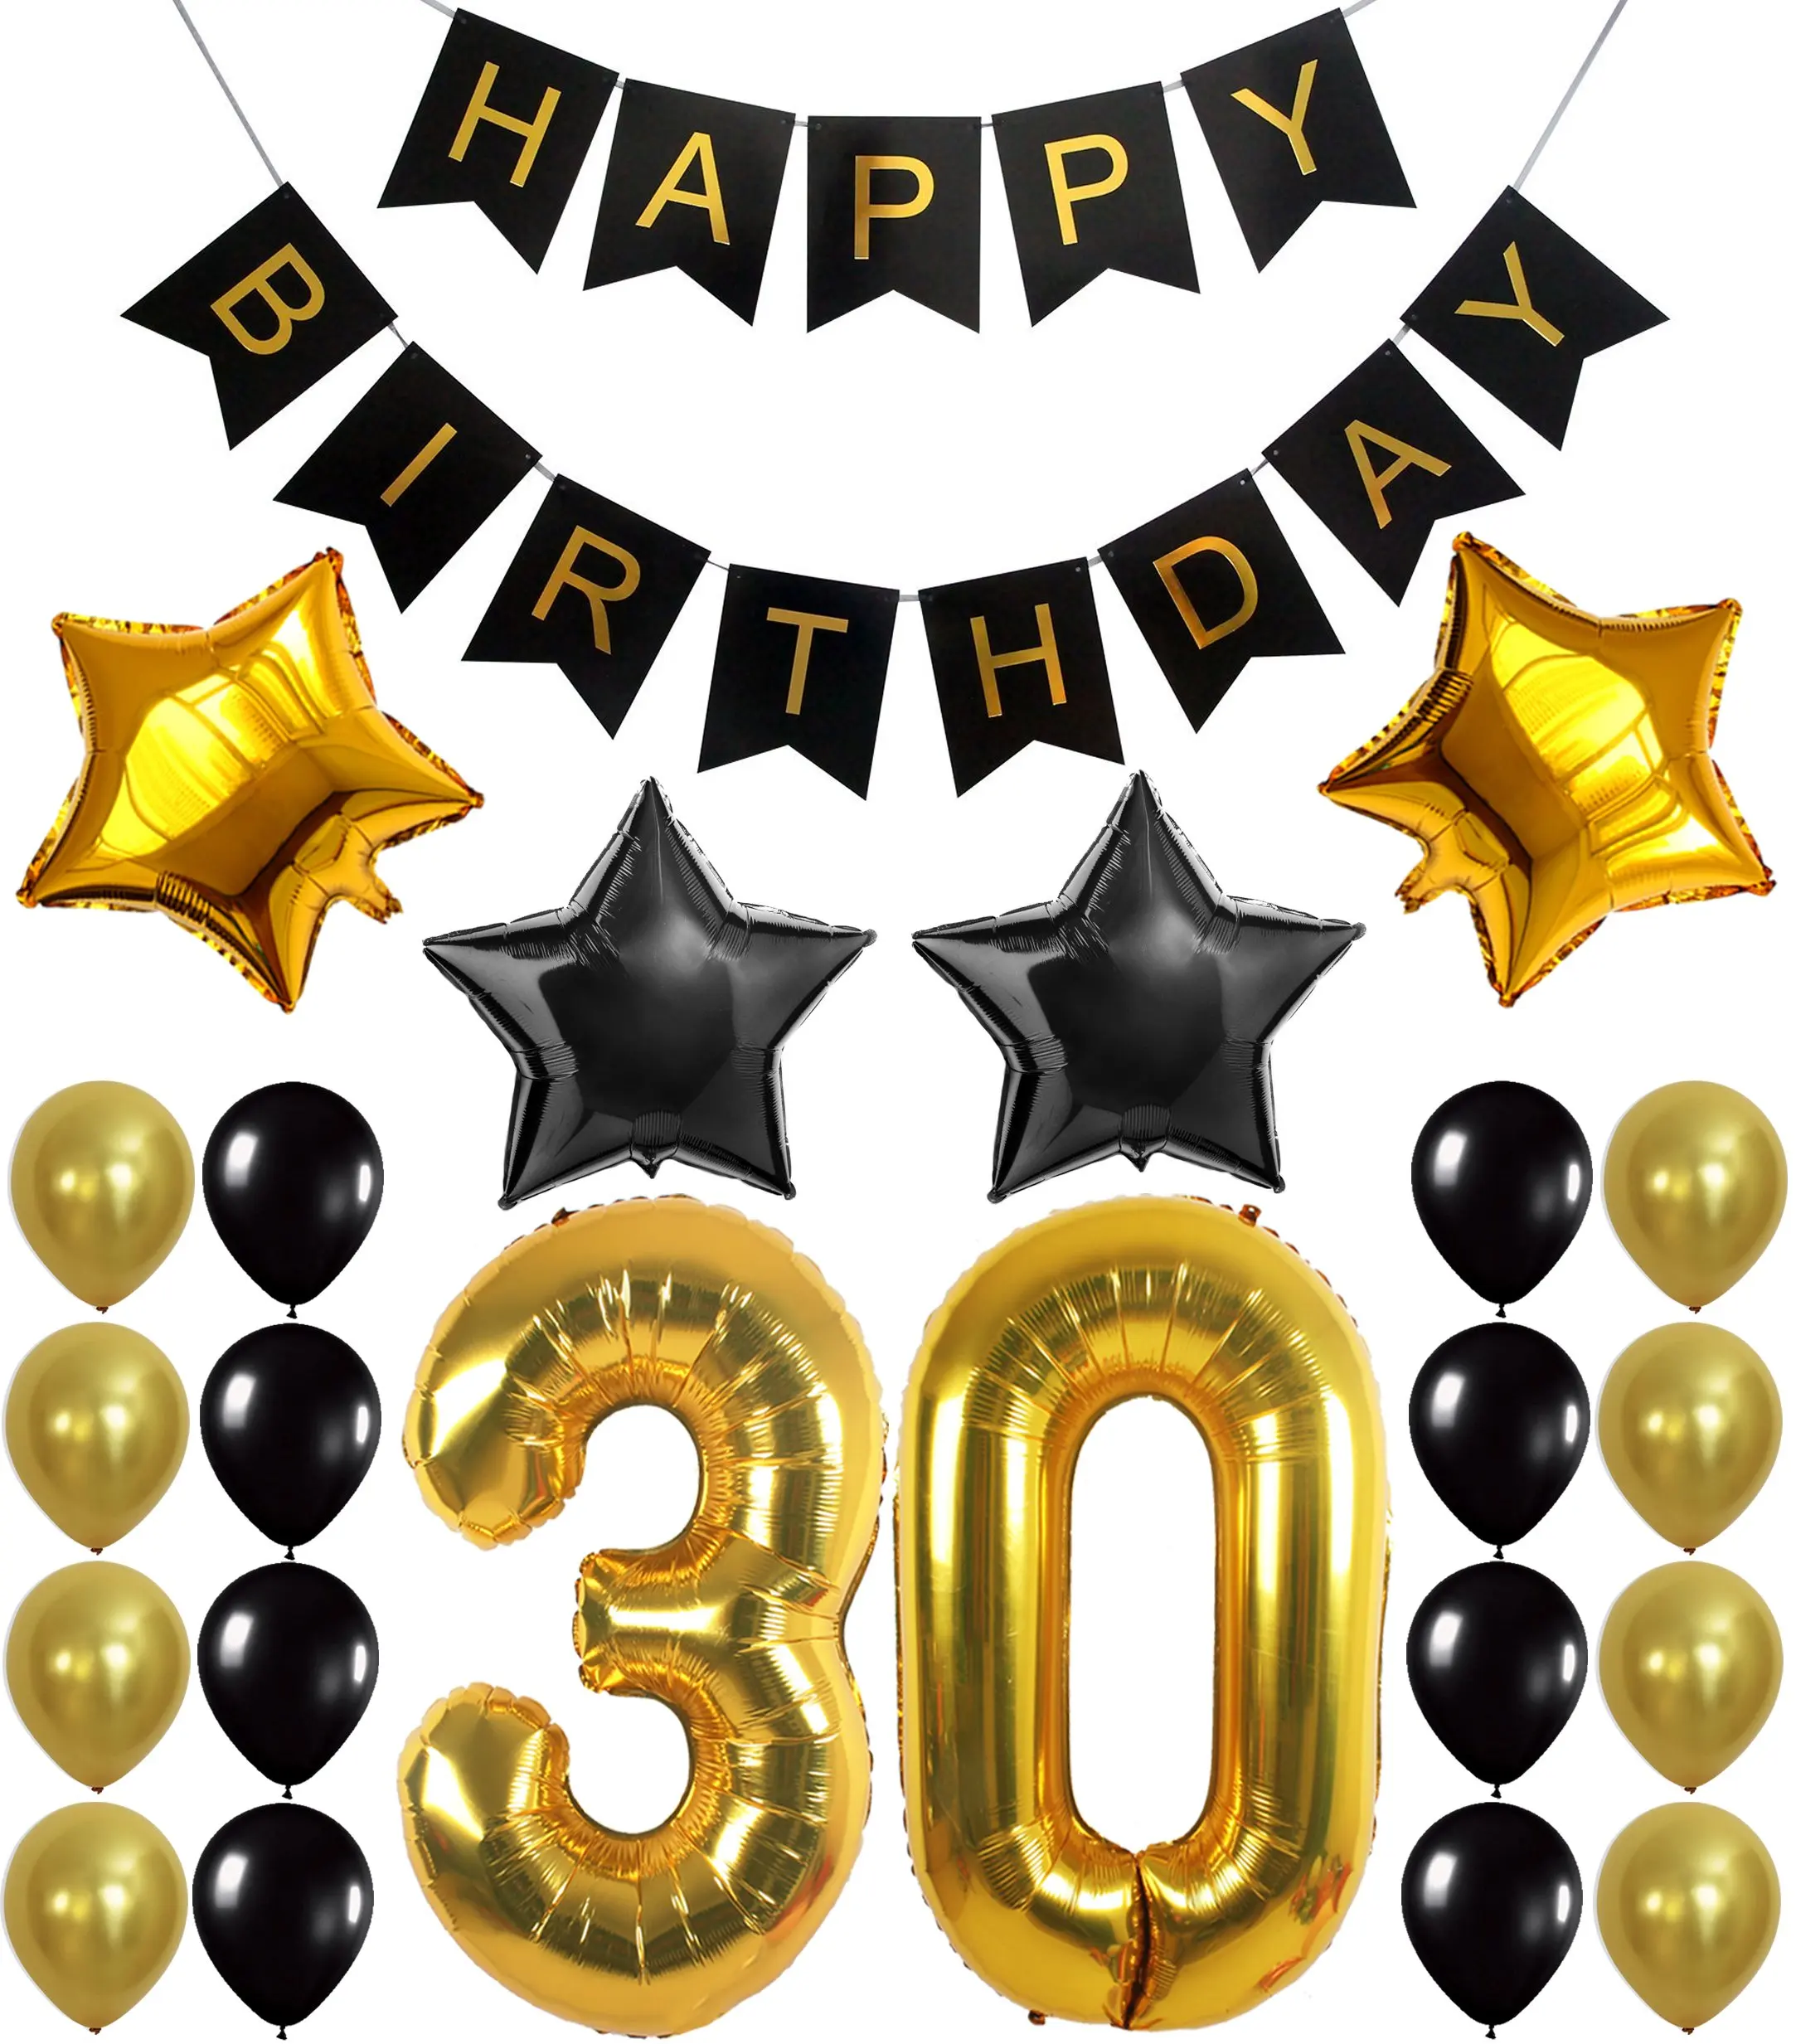 Buy 30th BIRTHDAY PARTY DECORATIONS KIT - Happy Birthday Banner, 30th ...